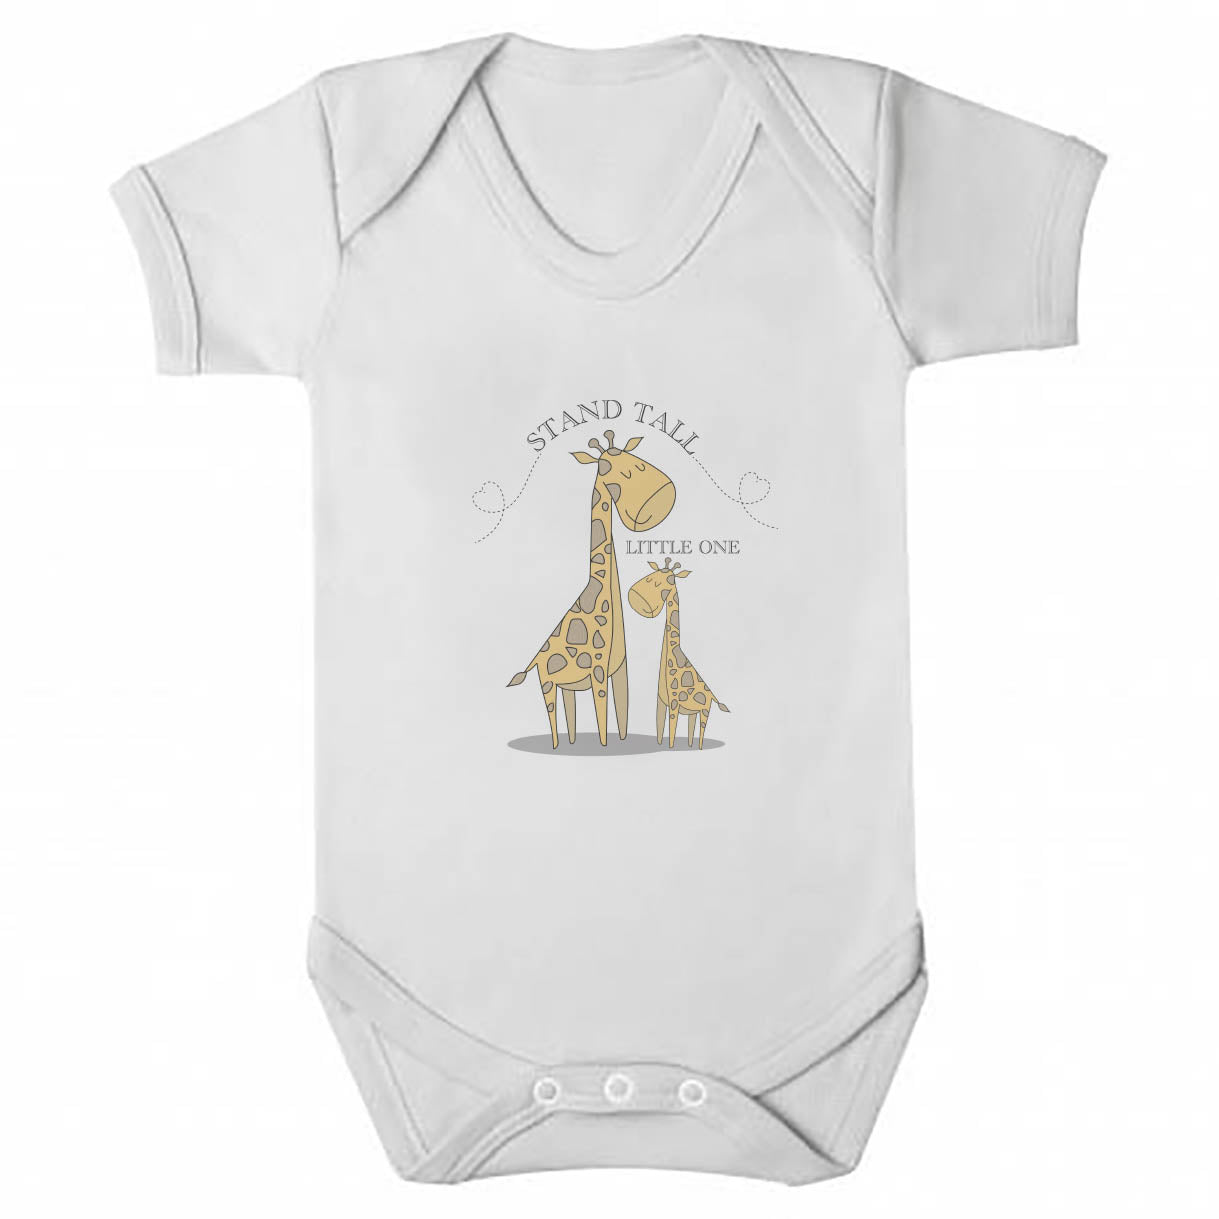 Giraffe stand tall Baby vest